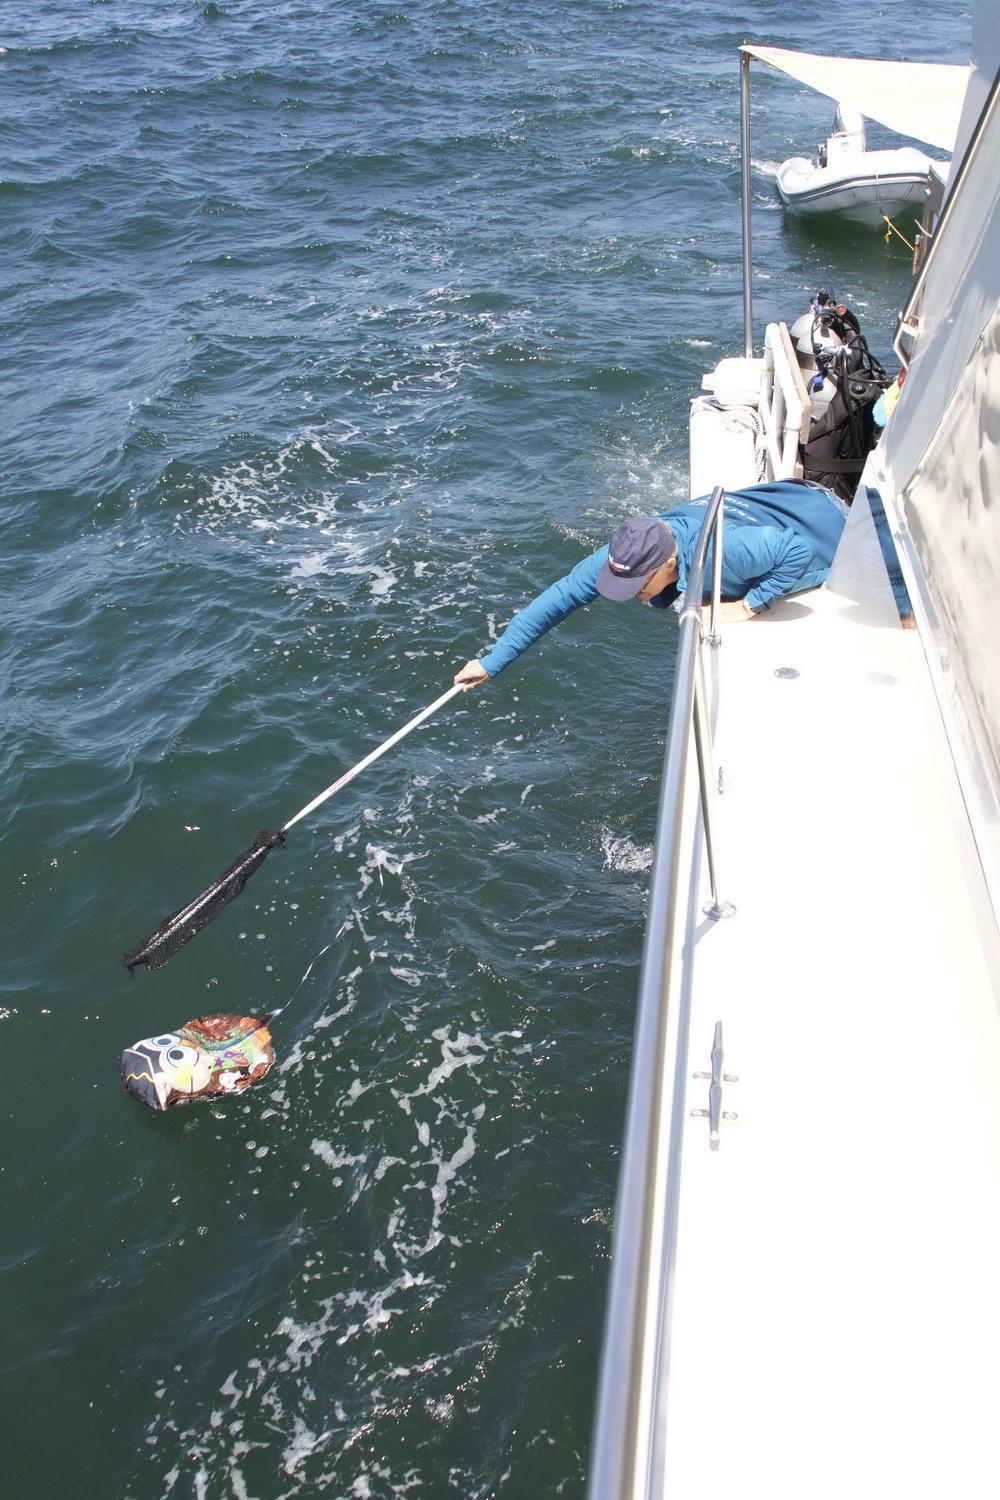 Ocean Defenders removing Mylar balloon debris from the sea